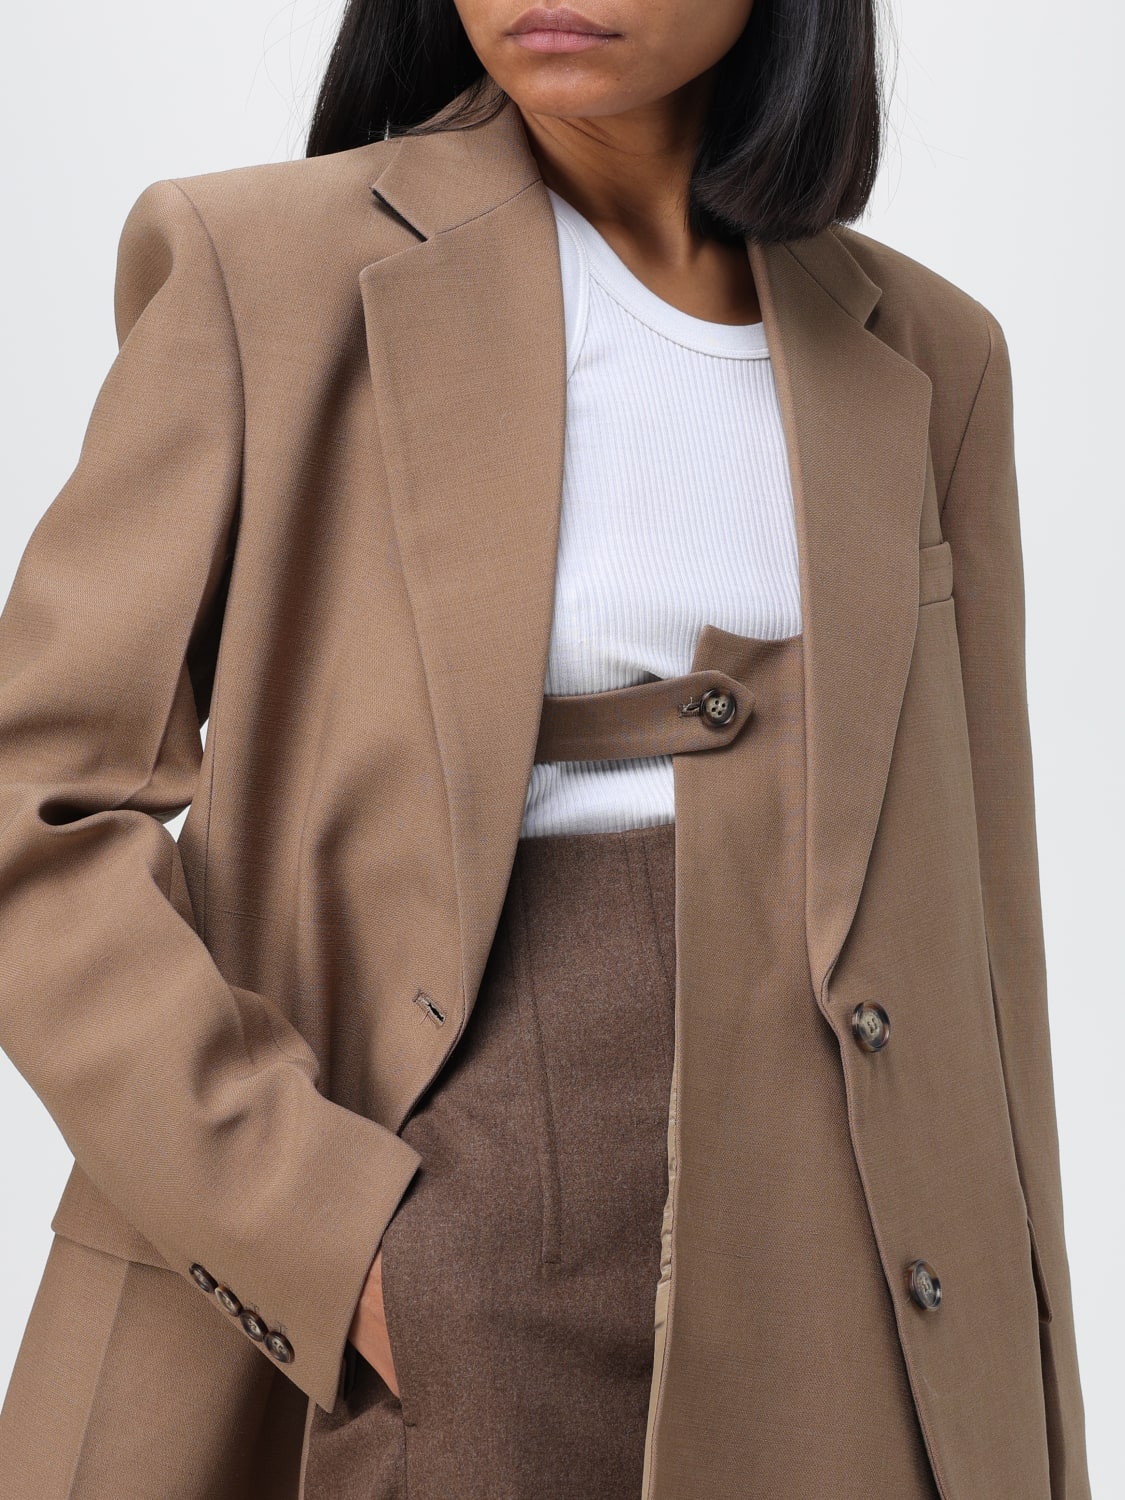 Womens Victoria Beckham Jackets & Coats